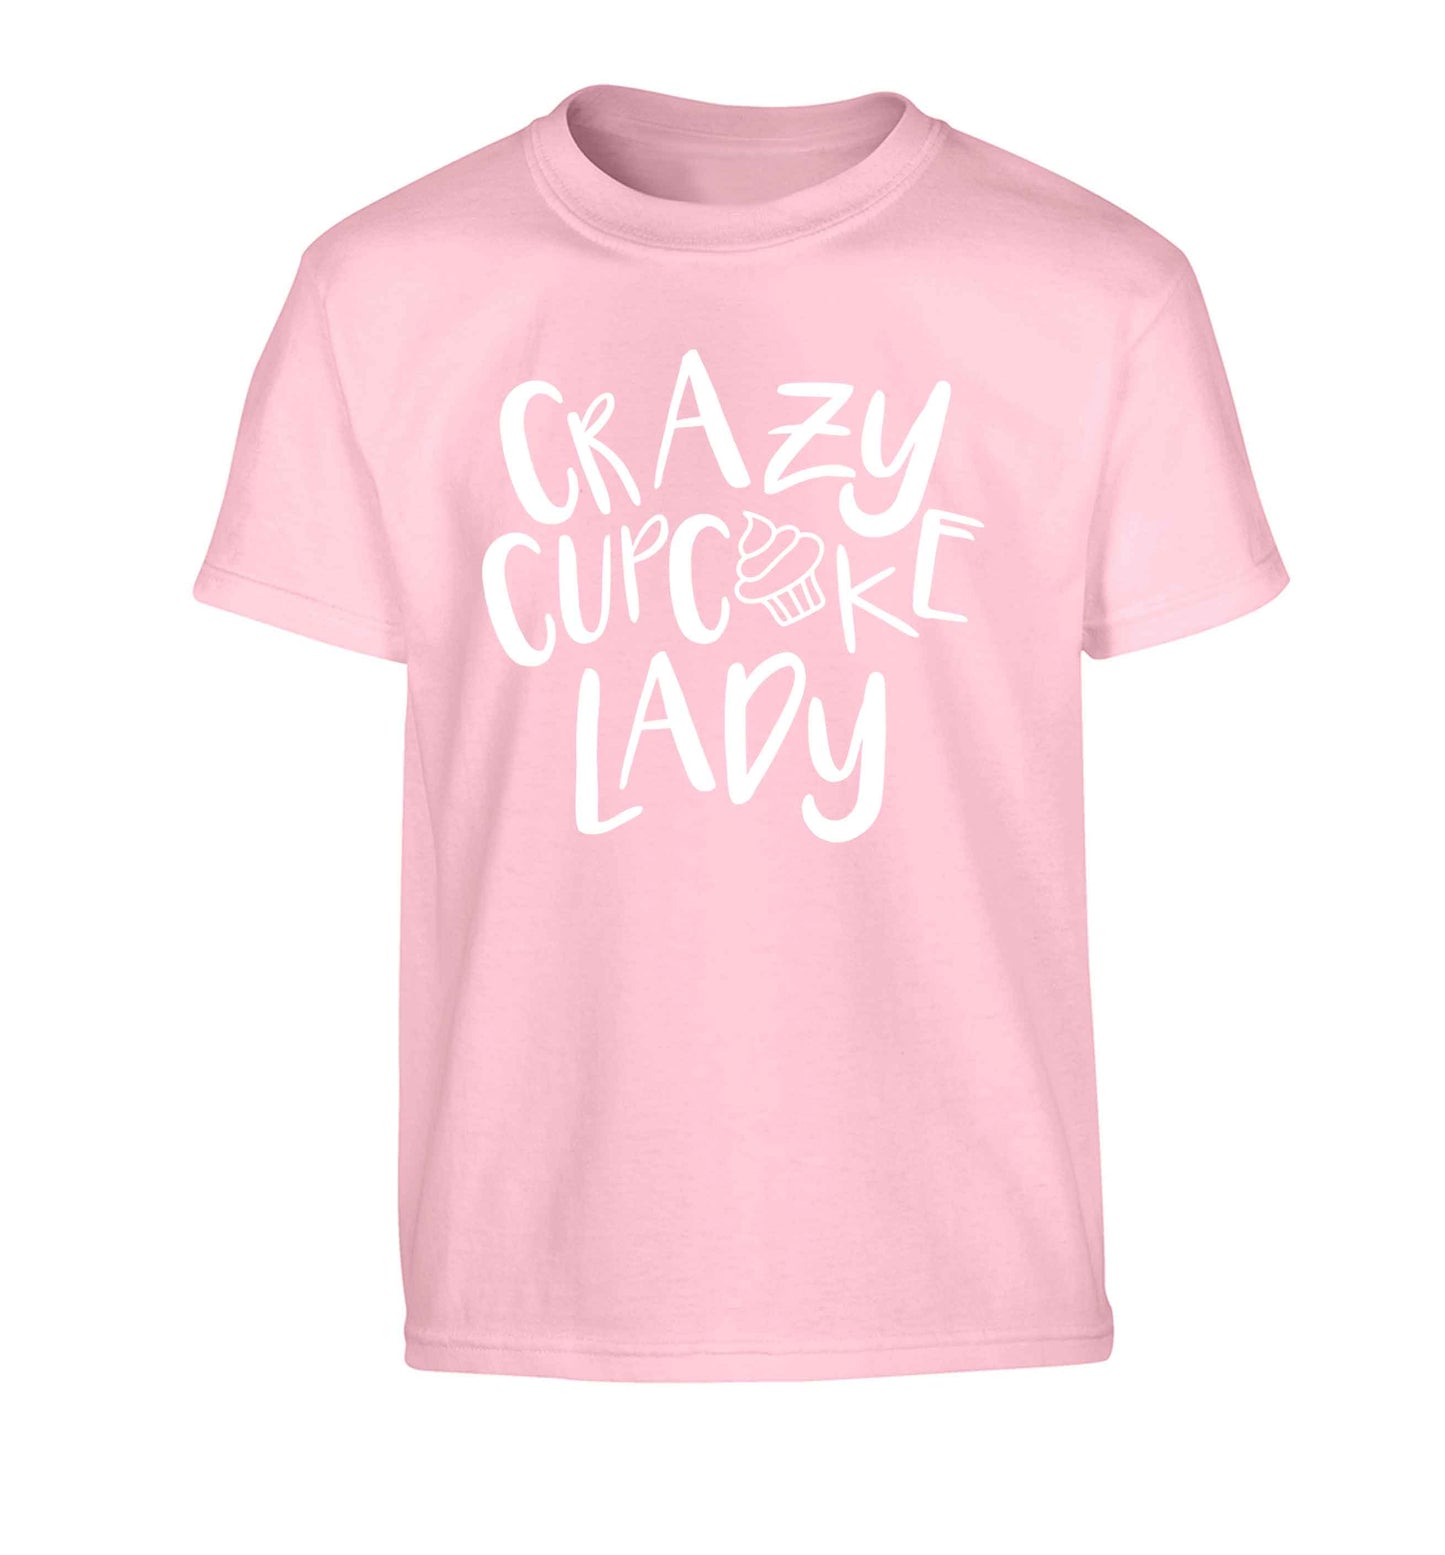 Crazy cupcake lady Children's light pink Tshirt 12-13 Years